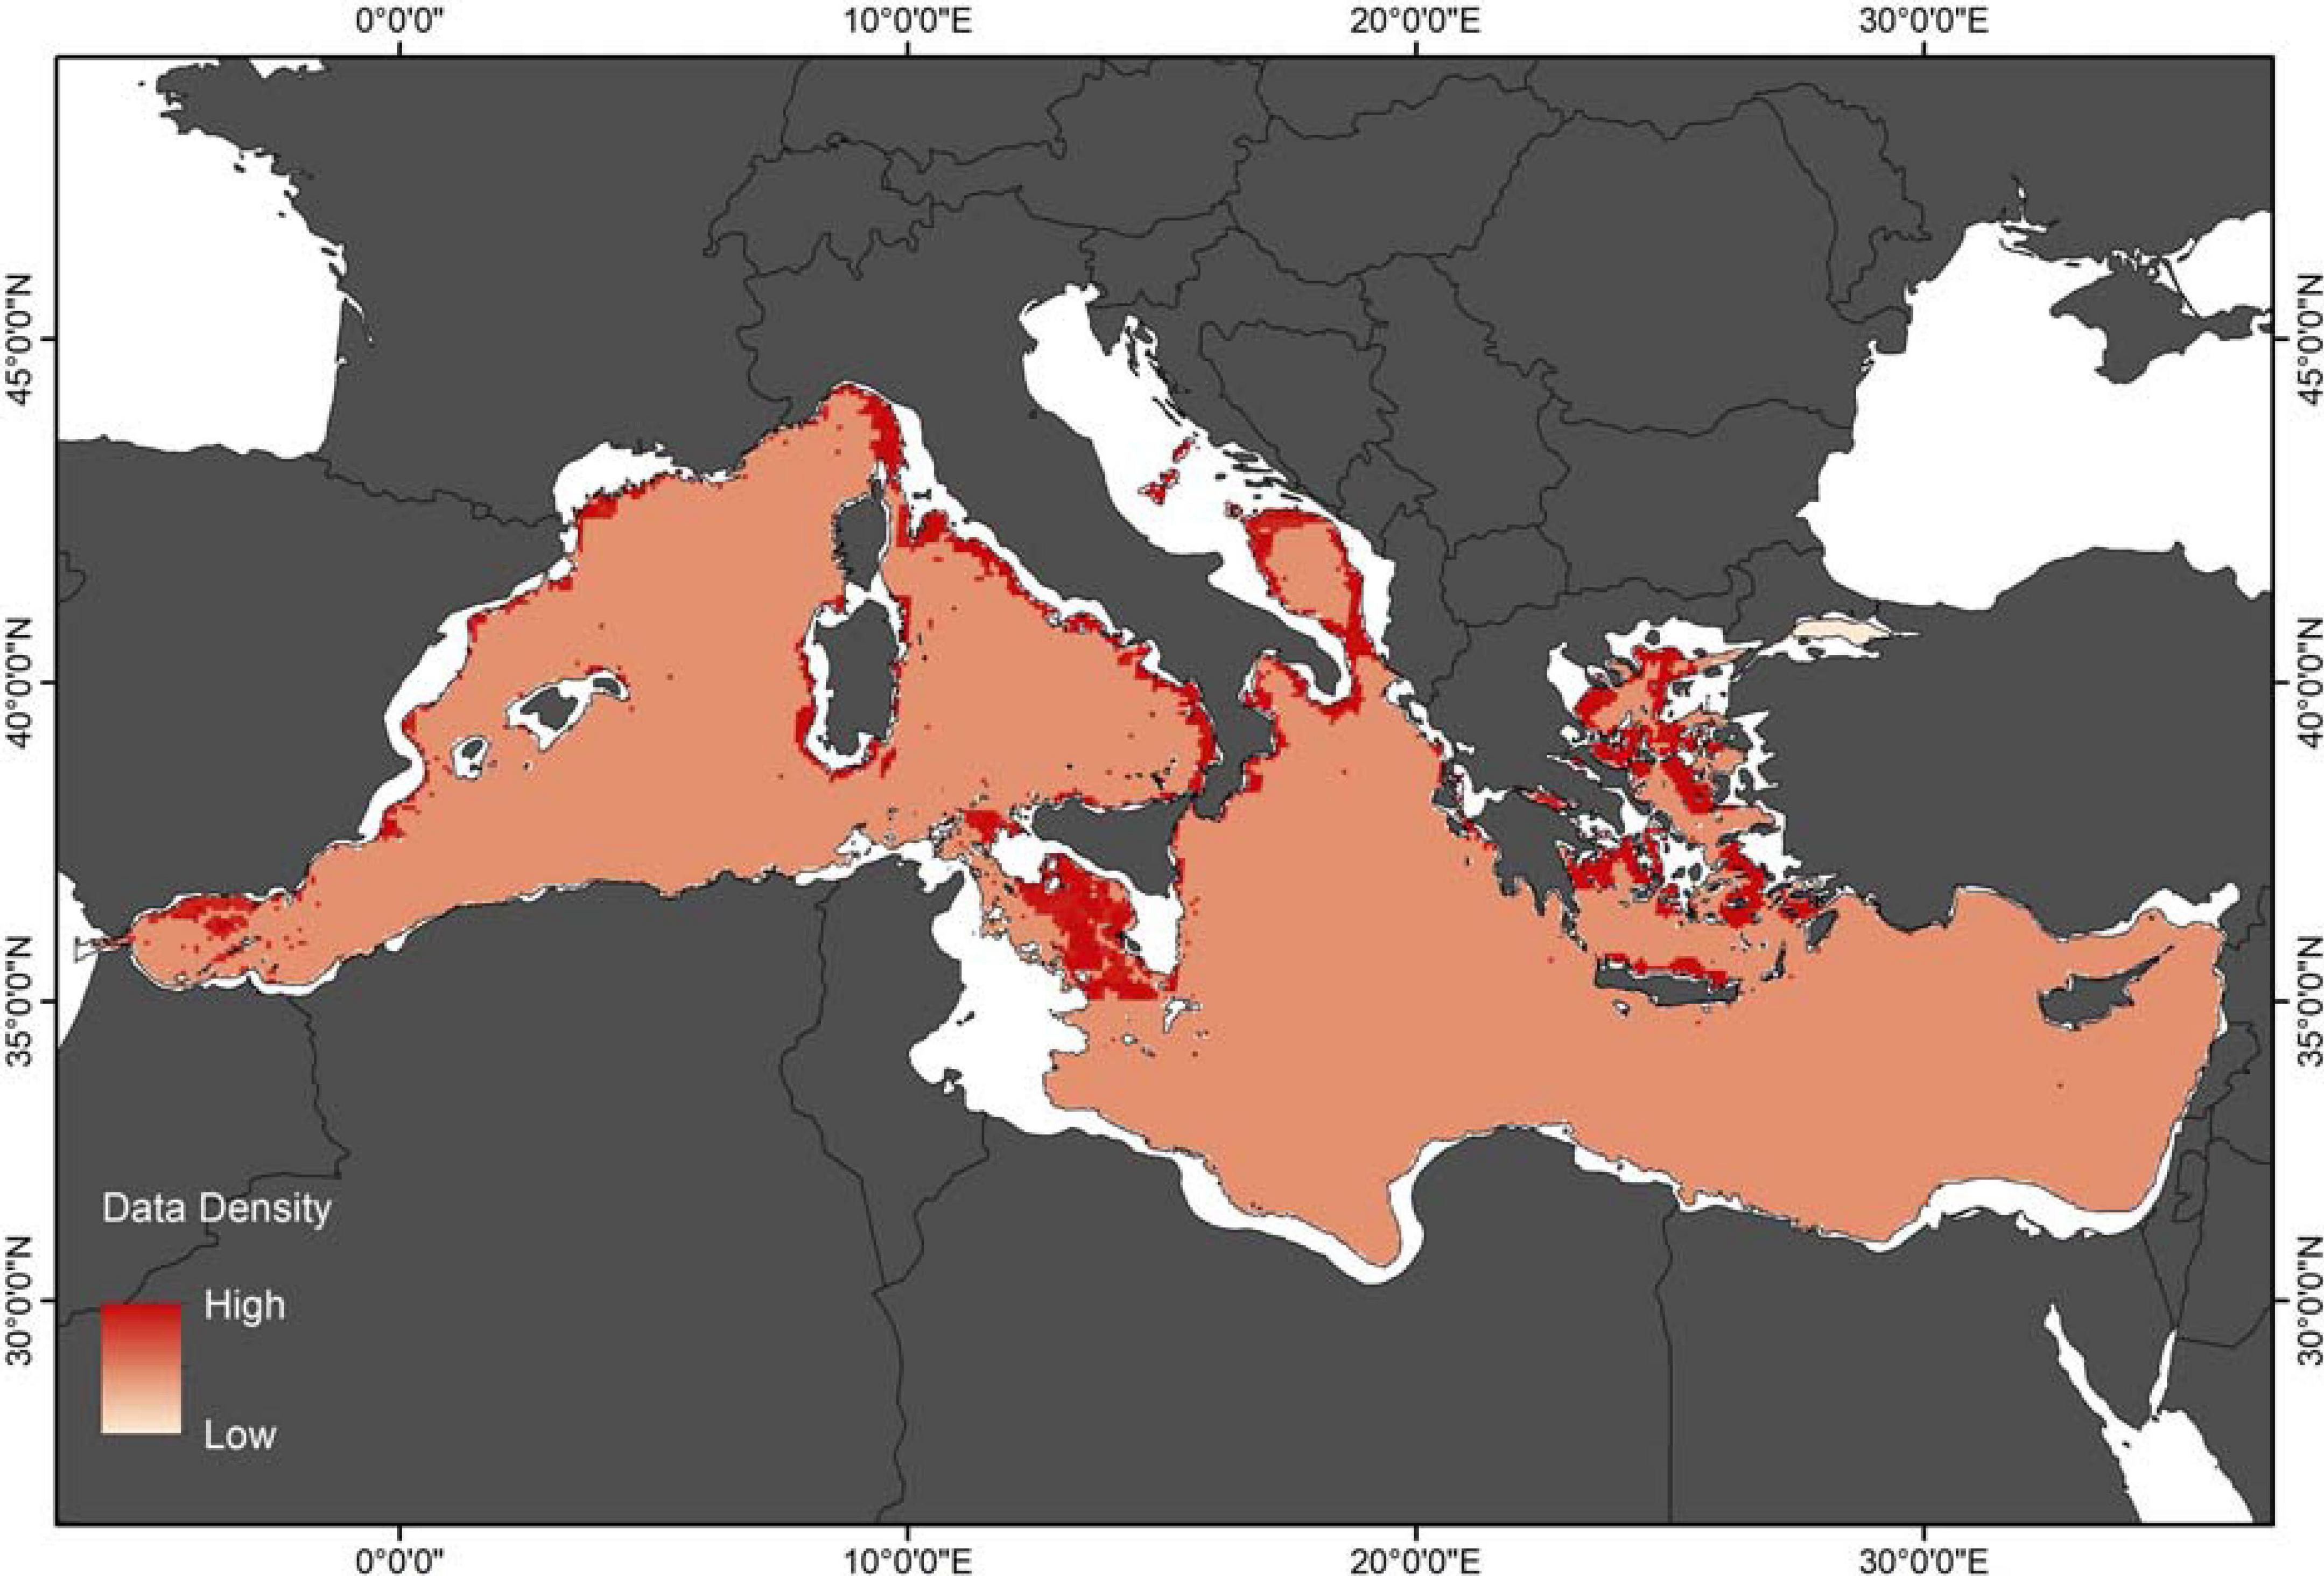 Marine Life & Species of the Mediterranean Sea 